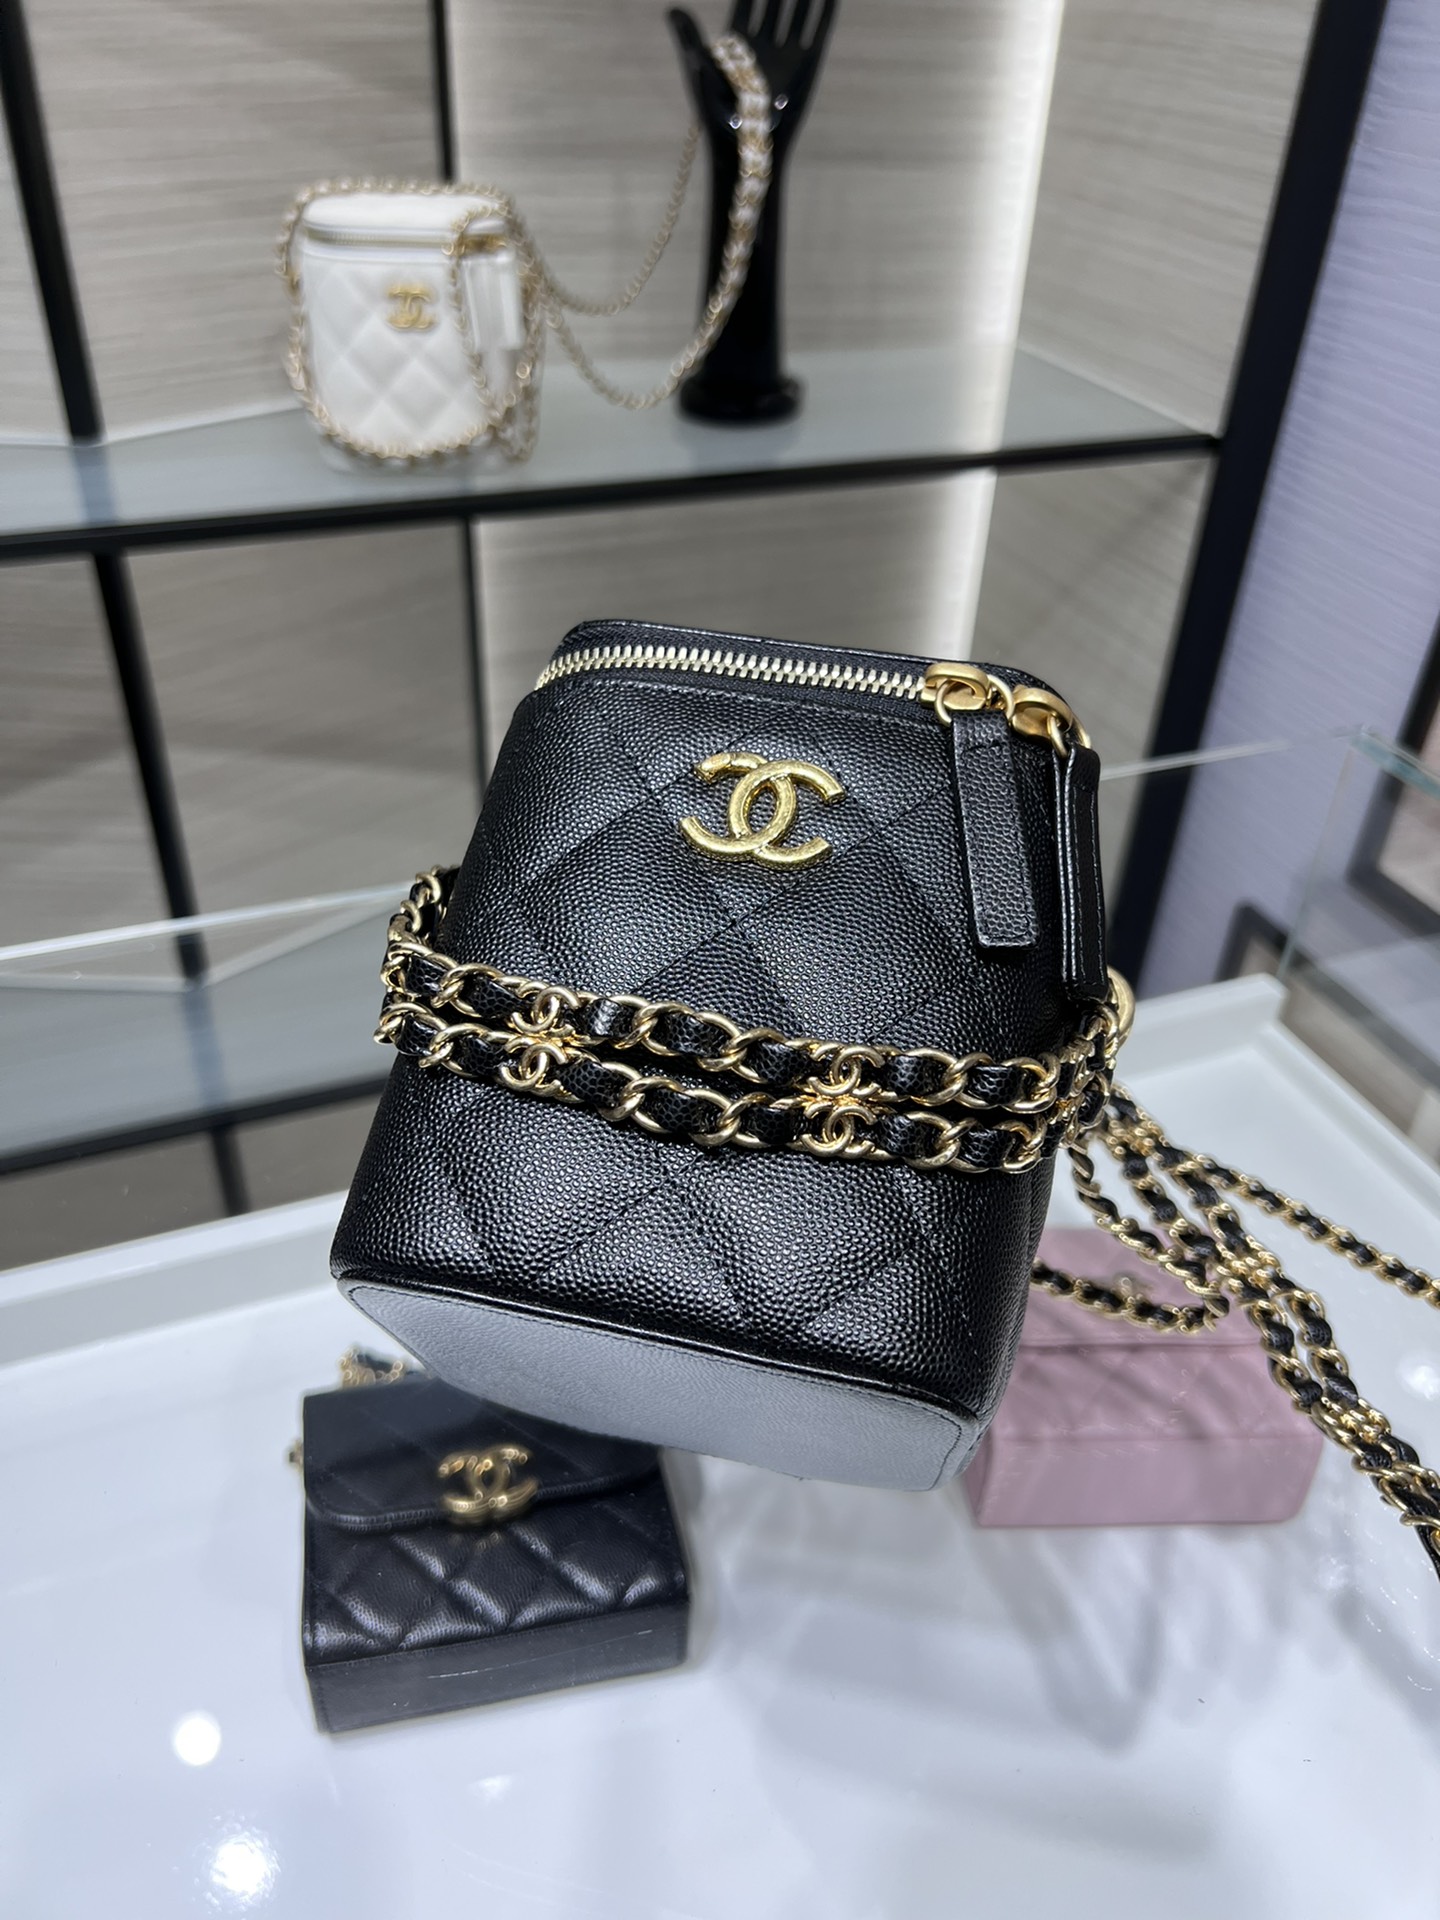 【P1430】Chanel女包价格 香奈儿黑色鱼子酱皮菱格双链方形盒子包斜挎包